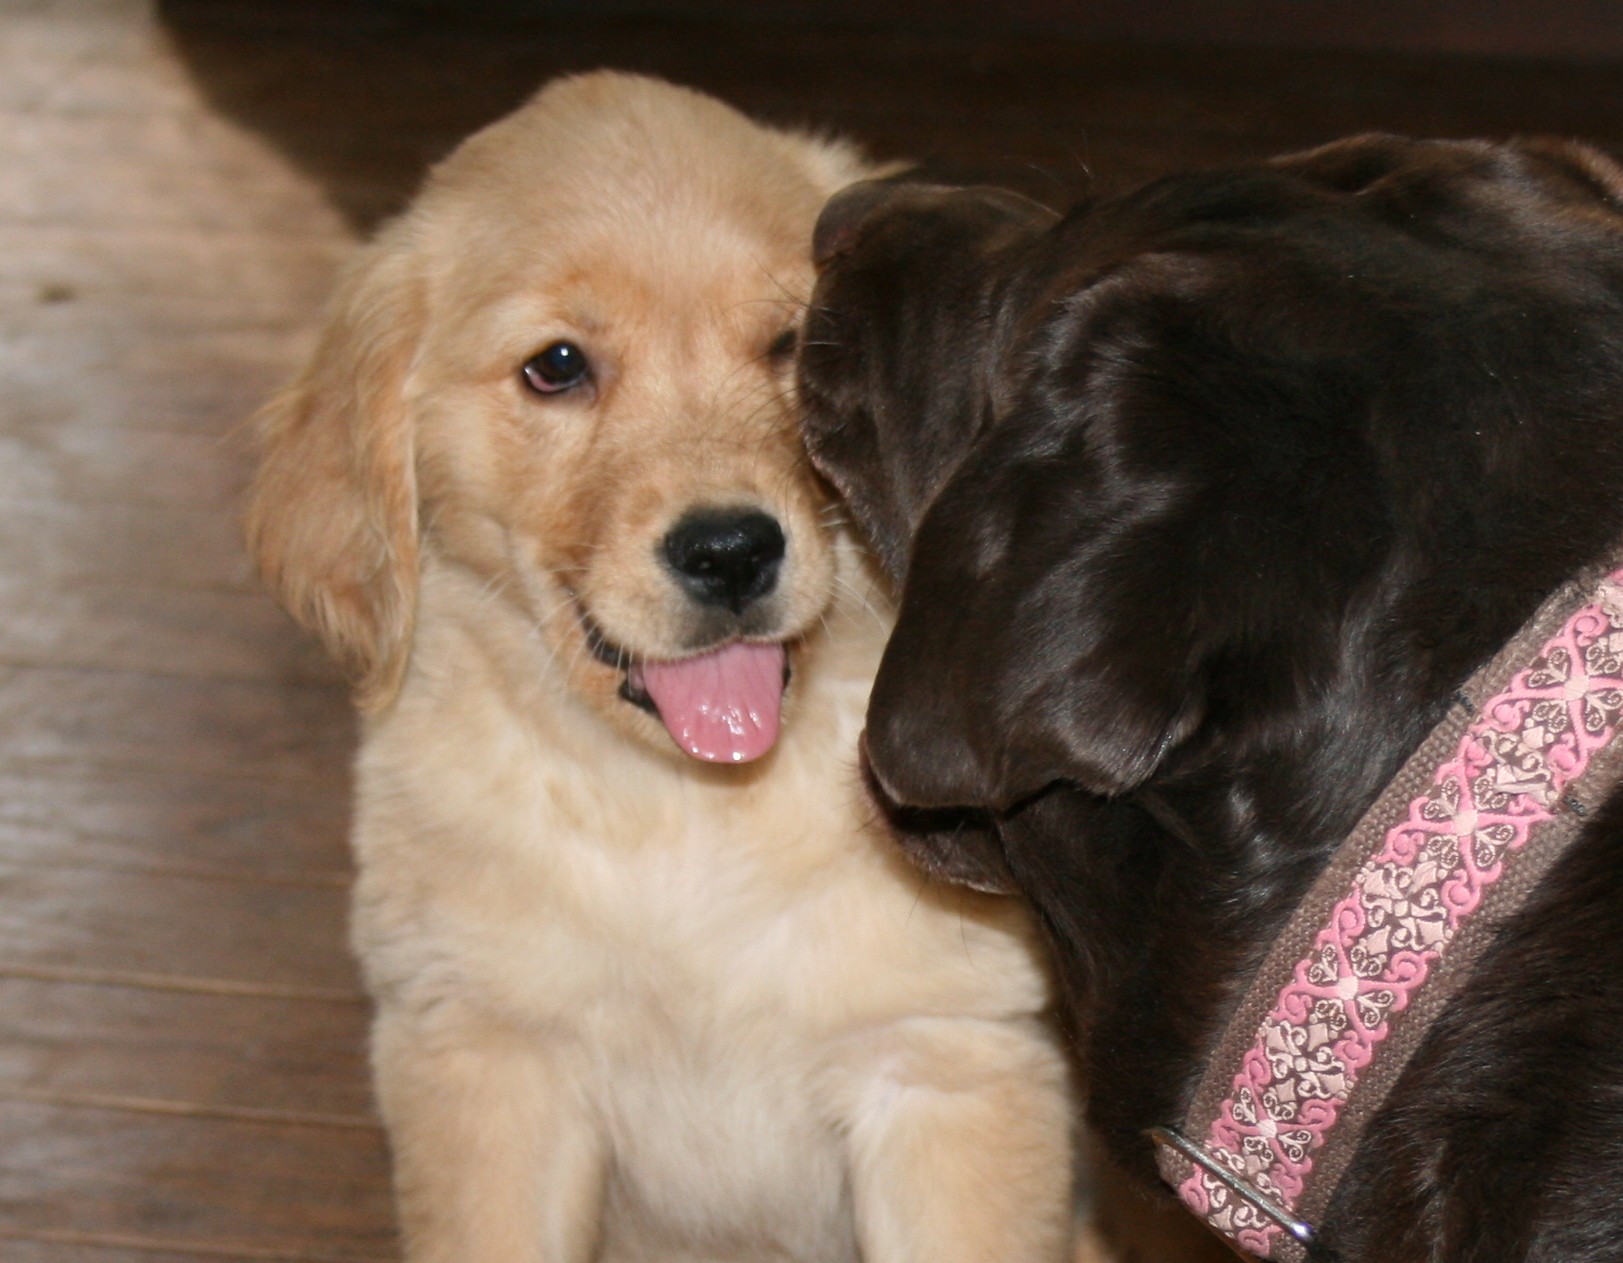 Riverlea and Koko sharing a kiss